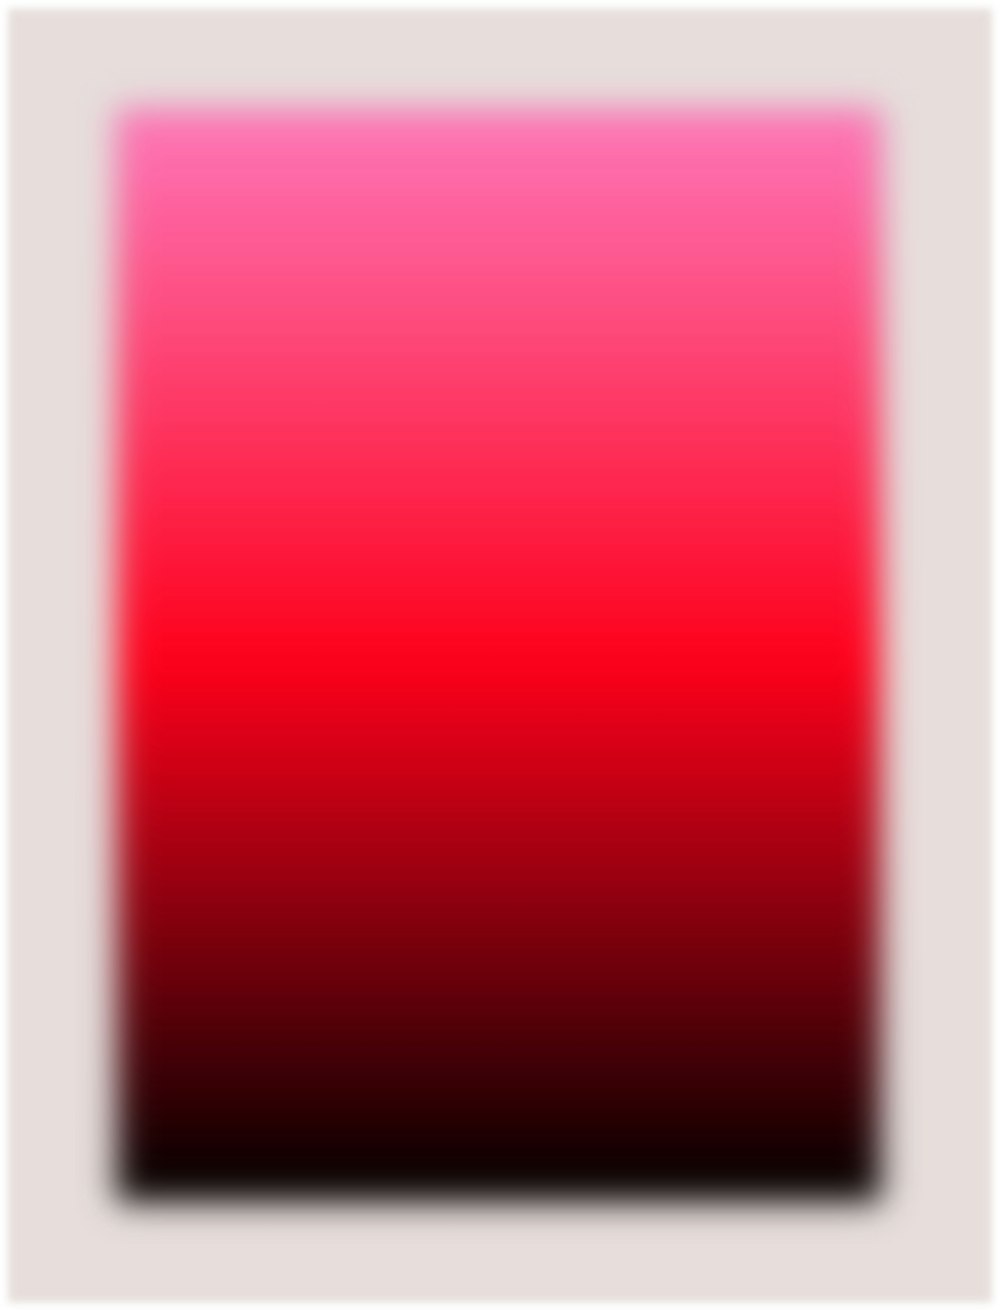 Rot-Weiß-Rahmenillustration